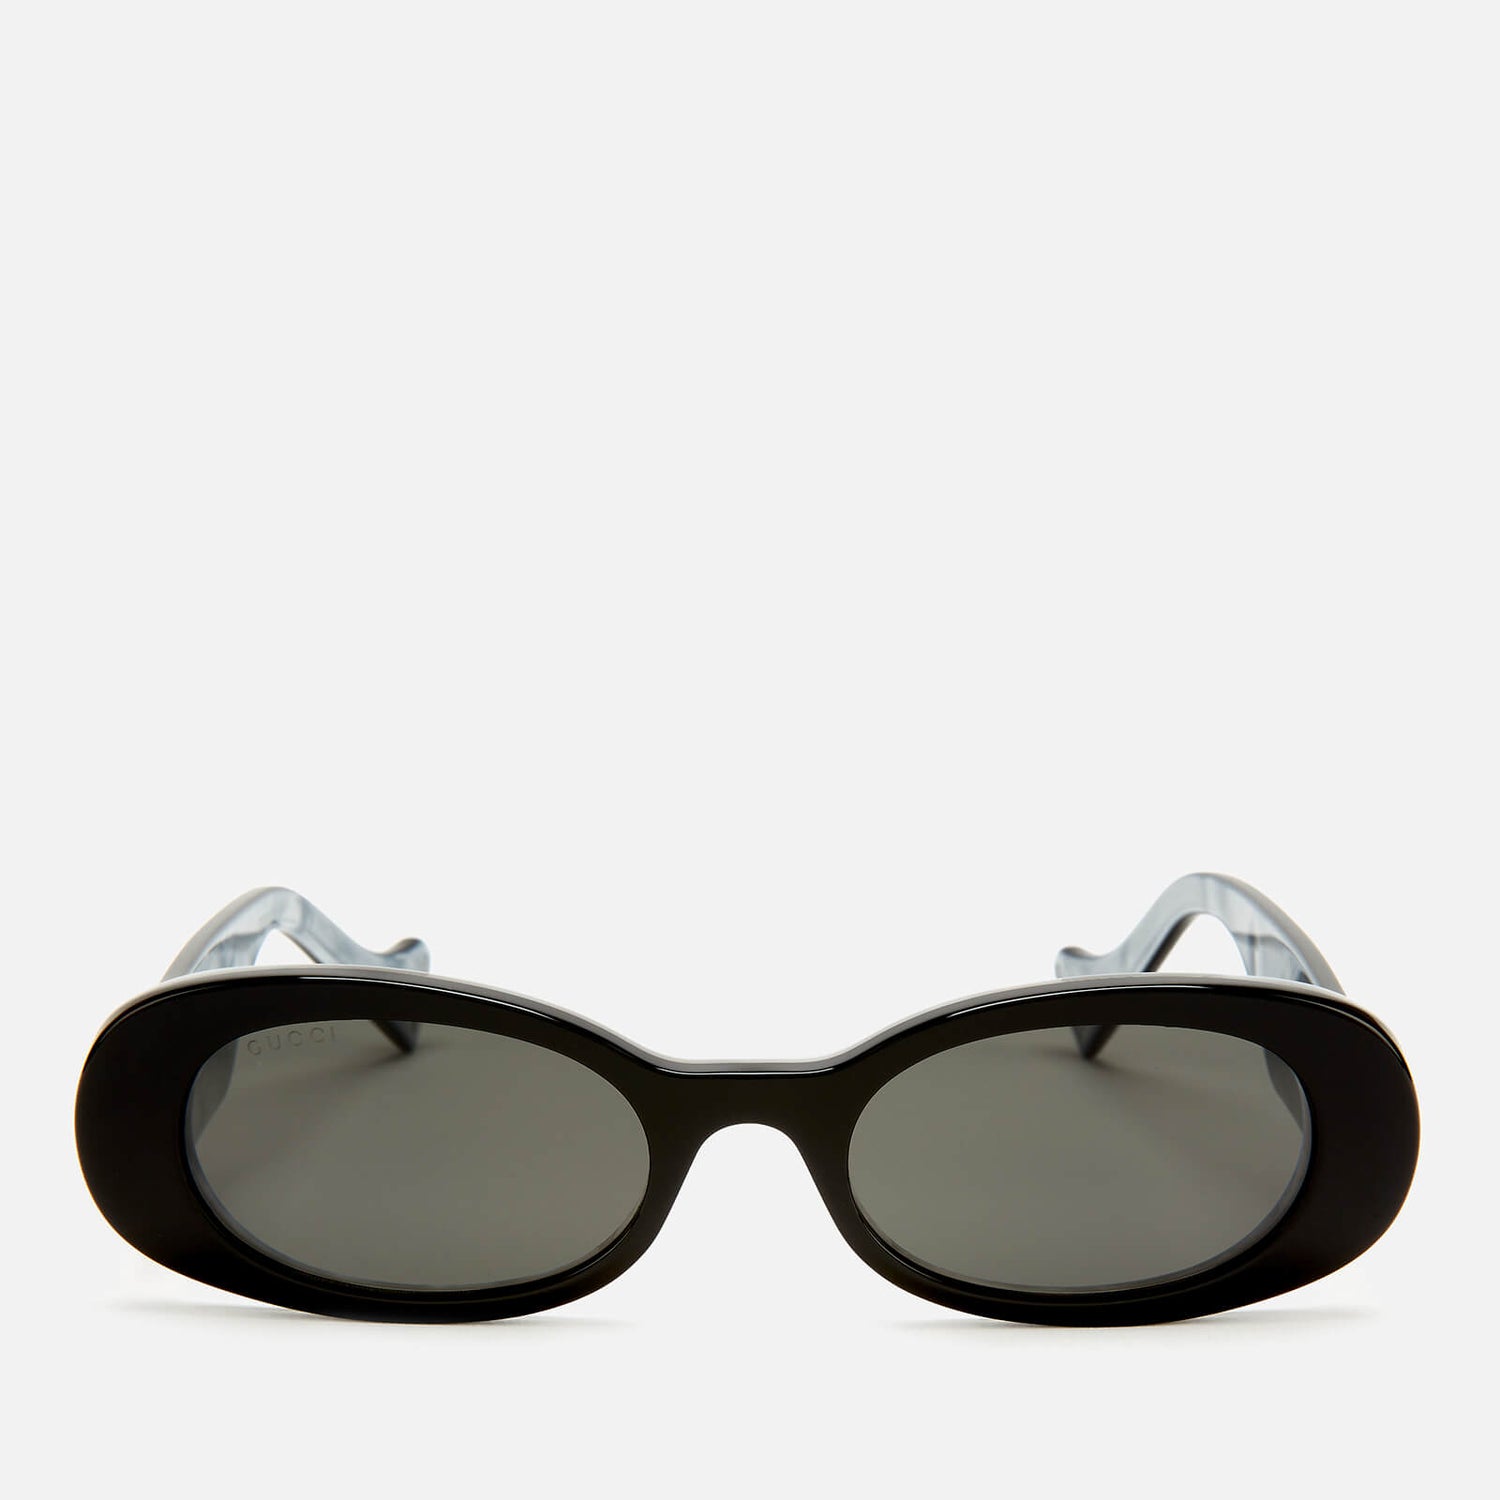 Gucci Women's Oval Frame Acetate Sunglasses - Black/Grey - Free UK ...